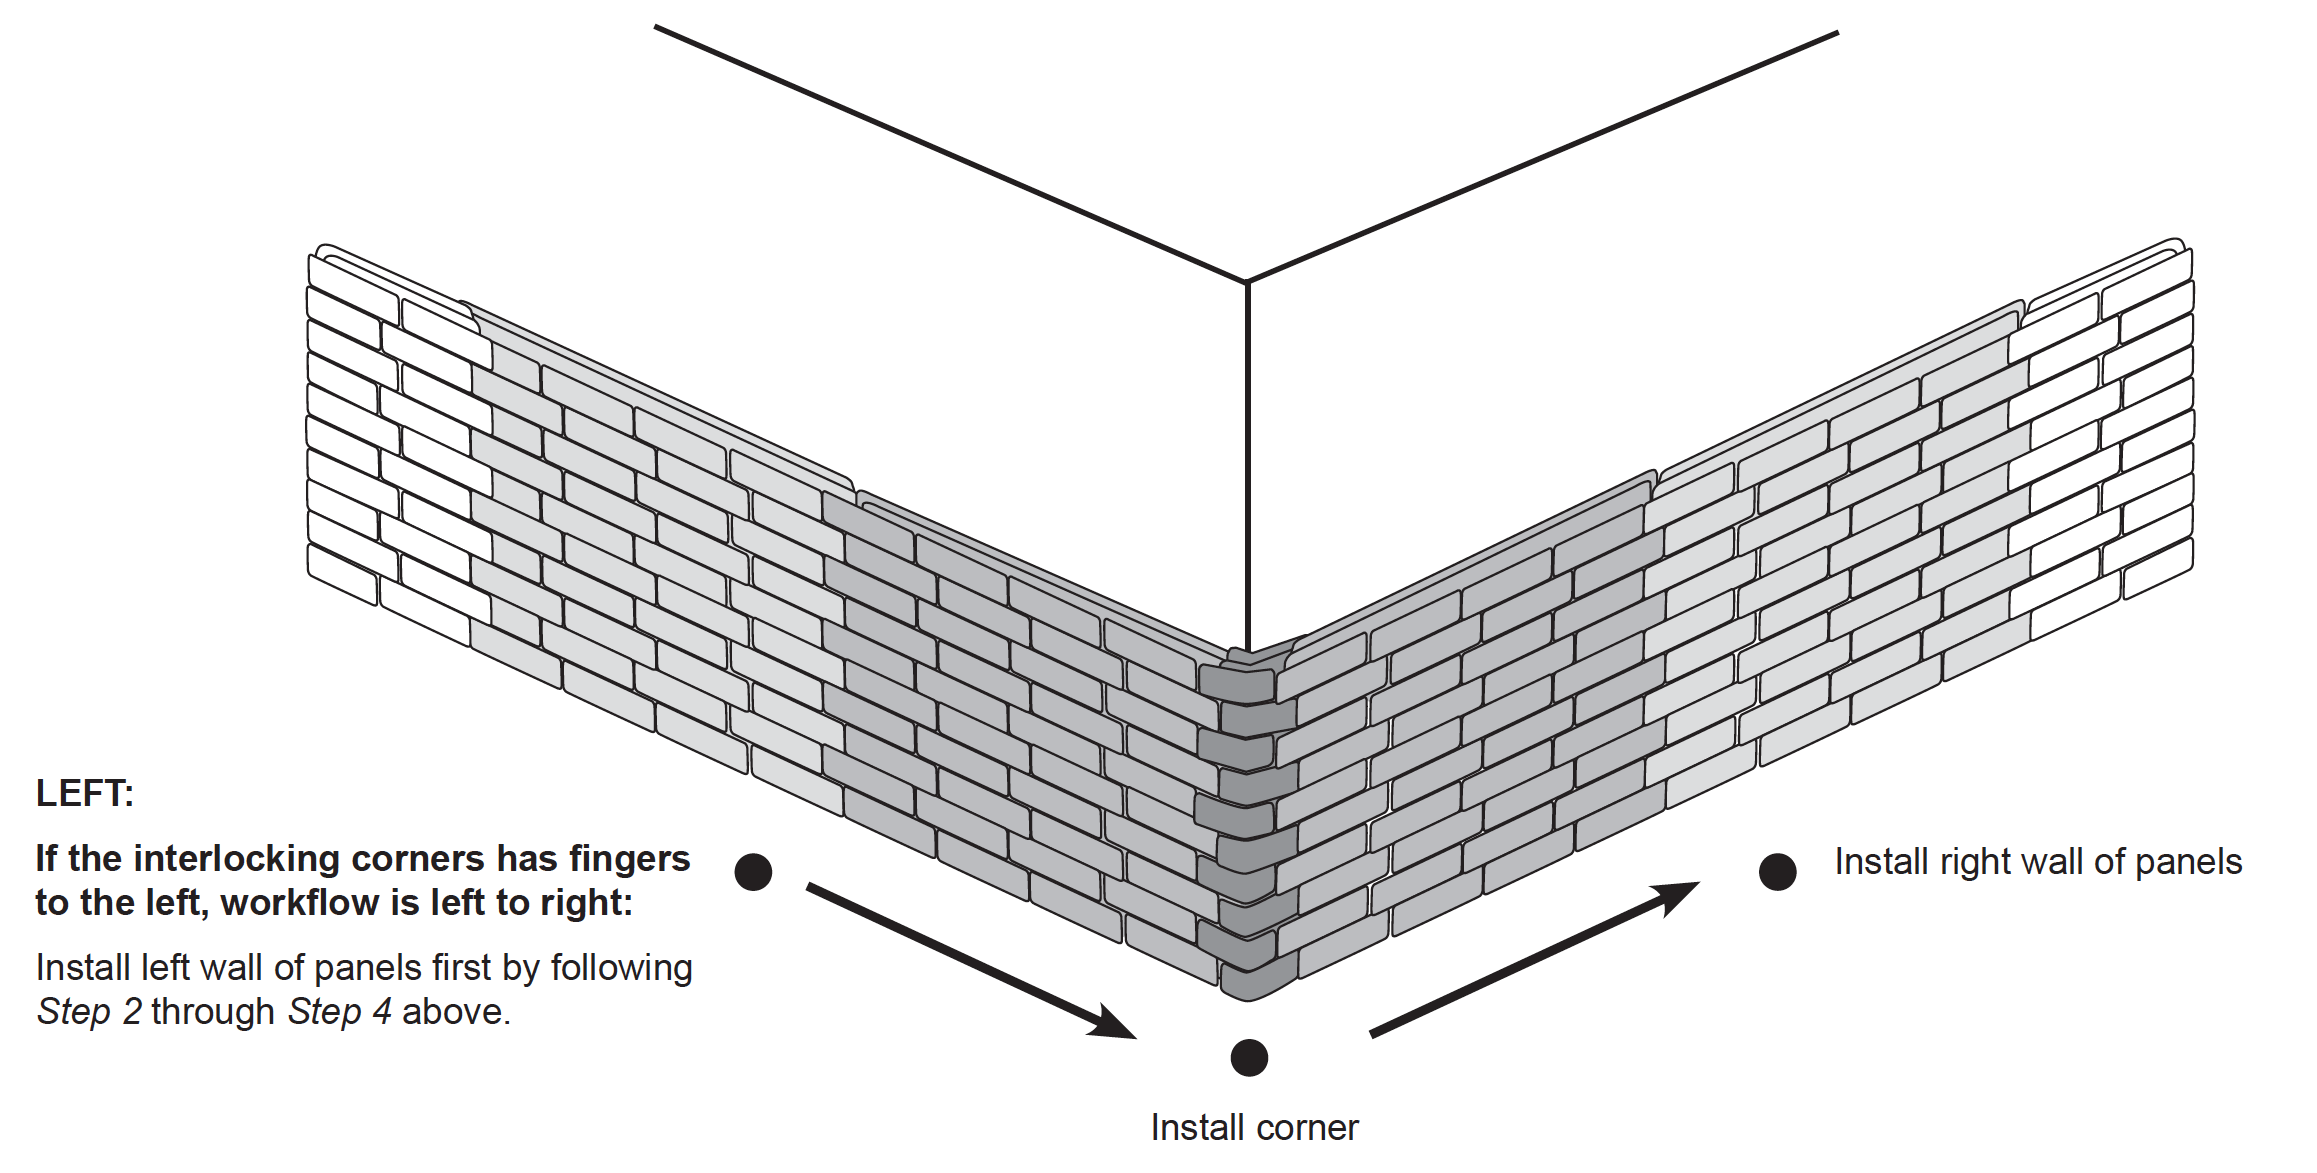 Interlocking Corner and Panels